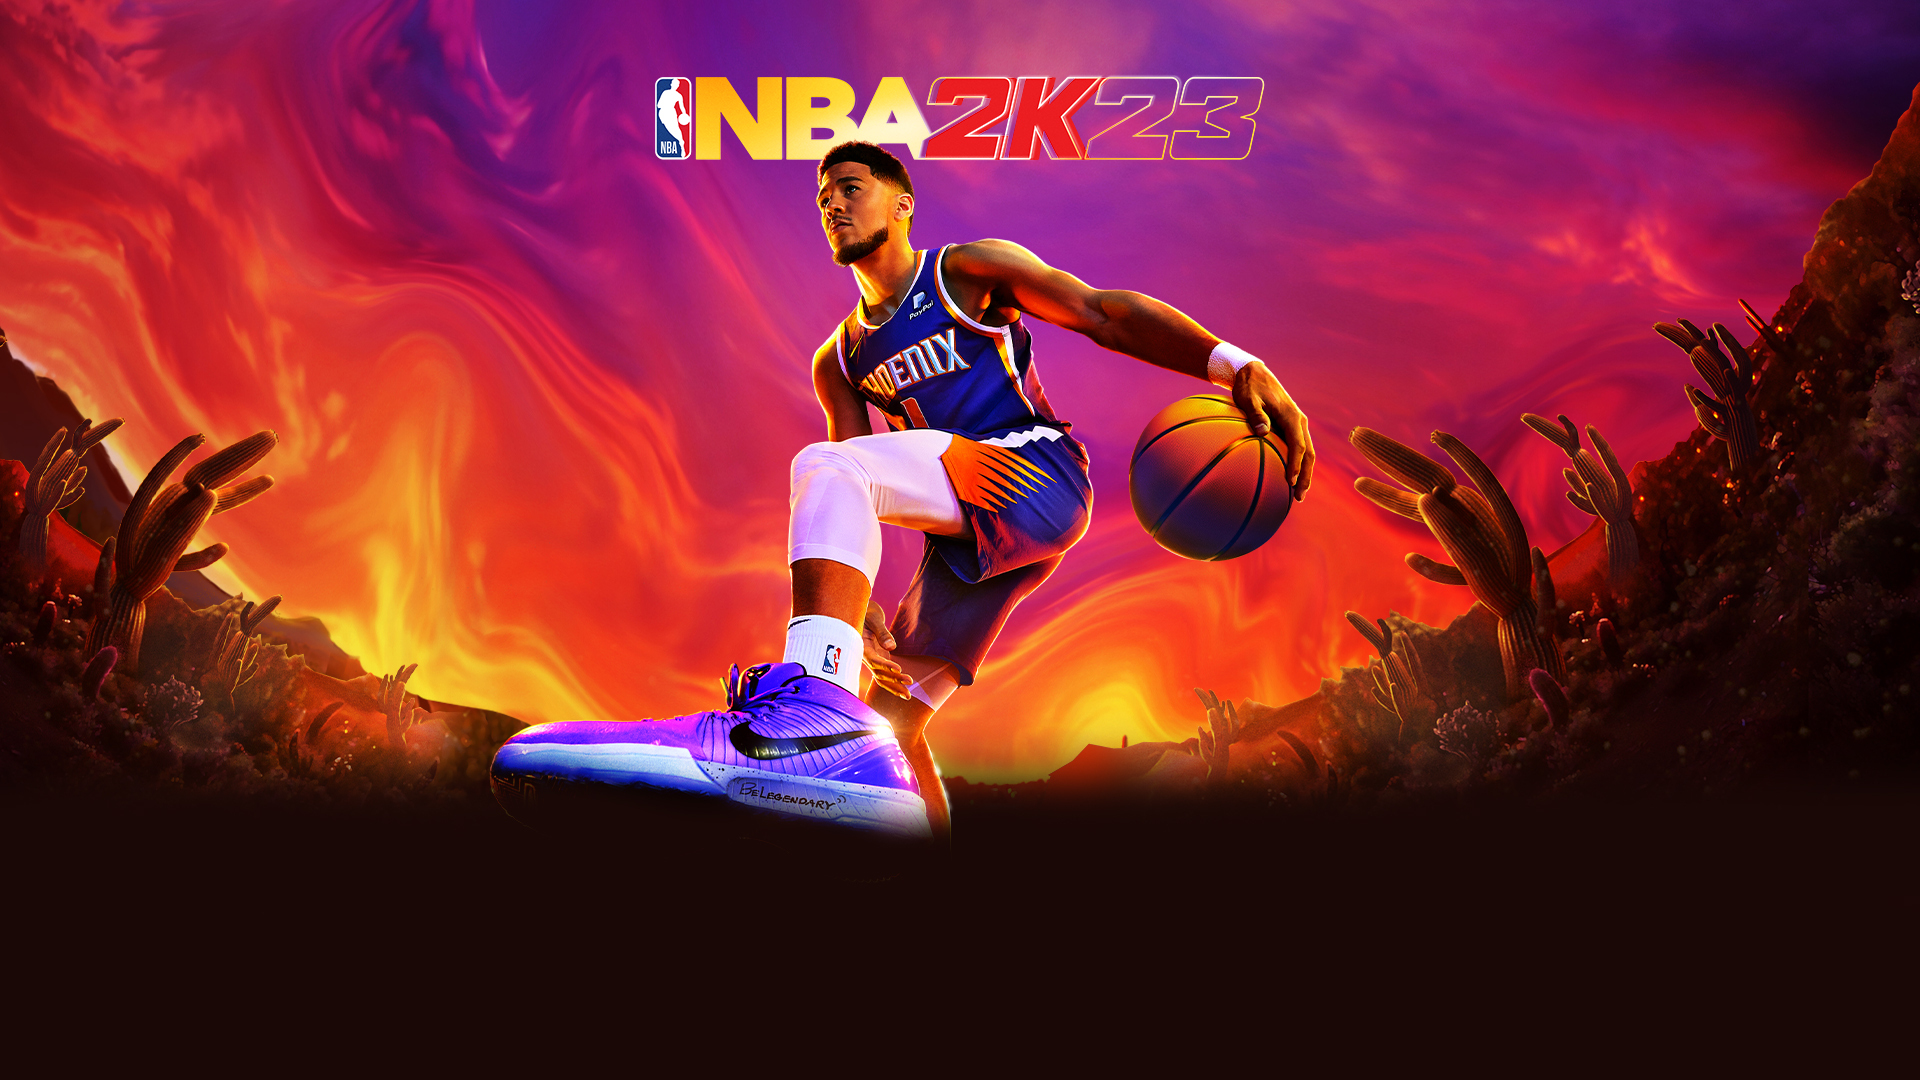 NBA 2K23 Basketball Game. Official NBA Video Game